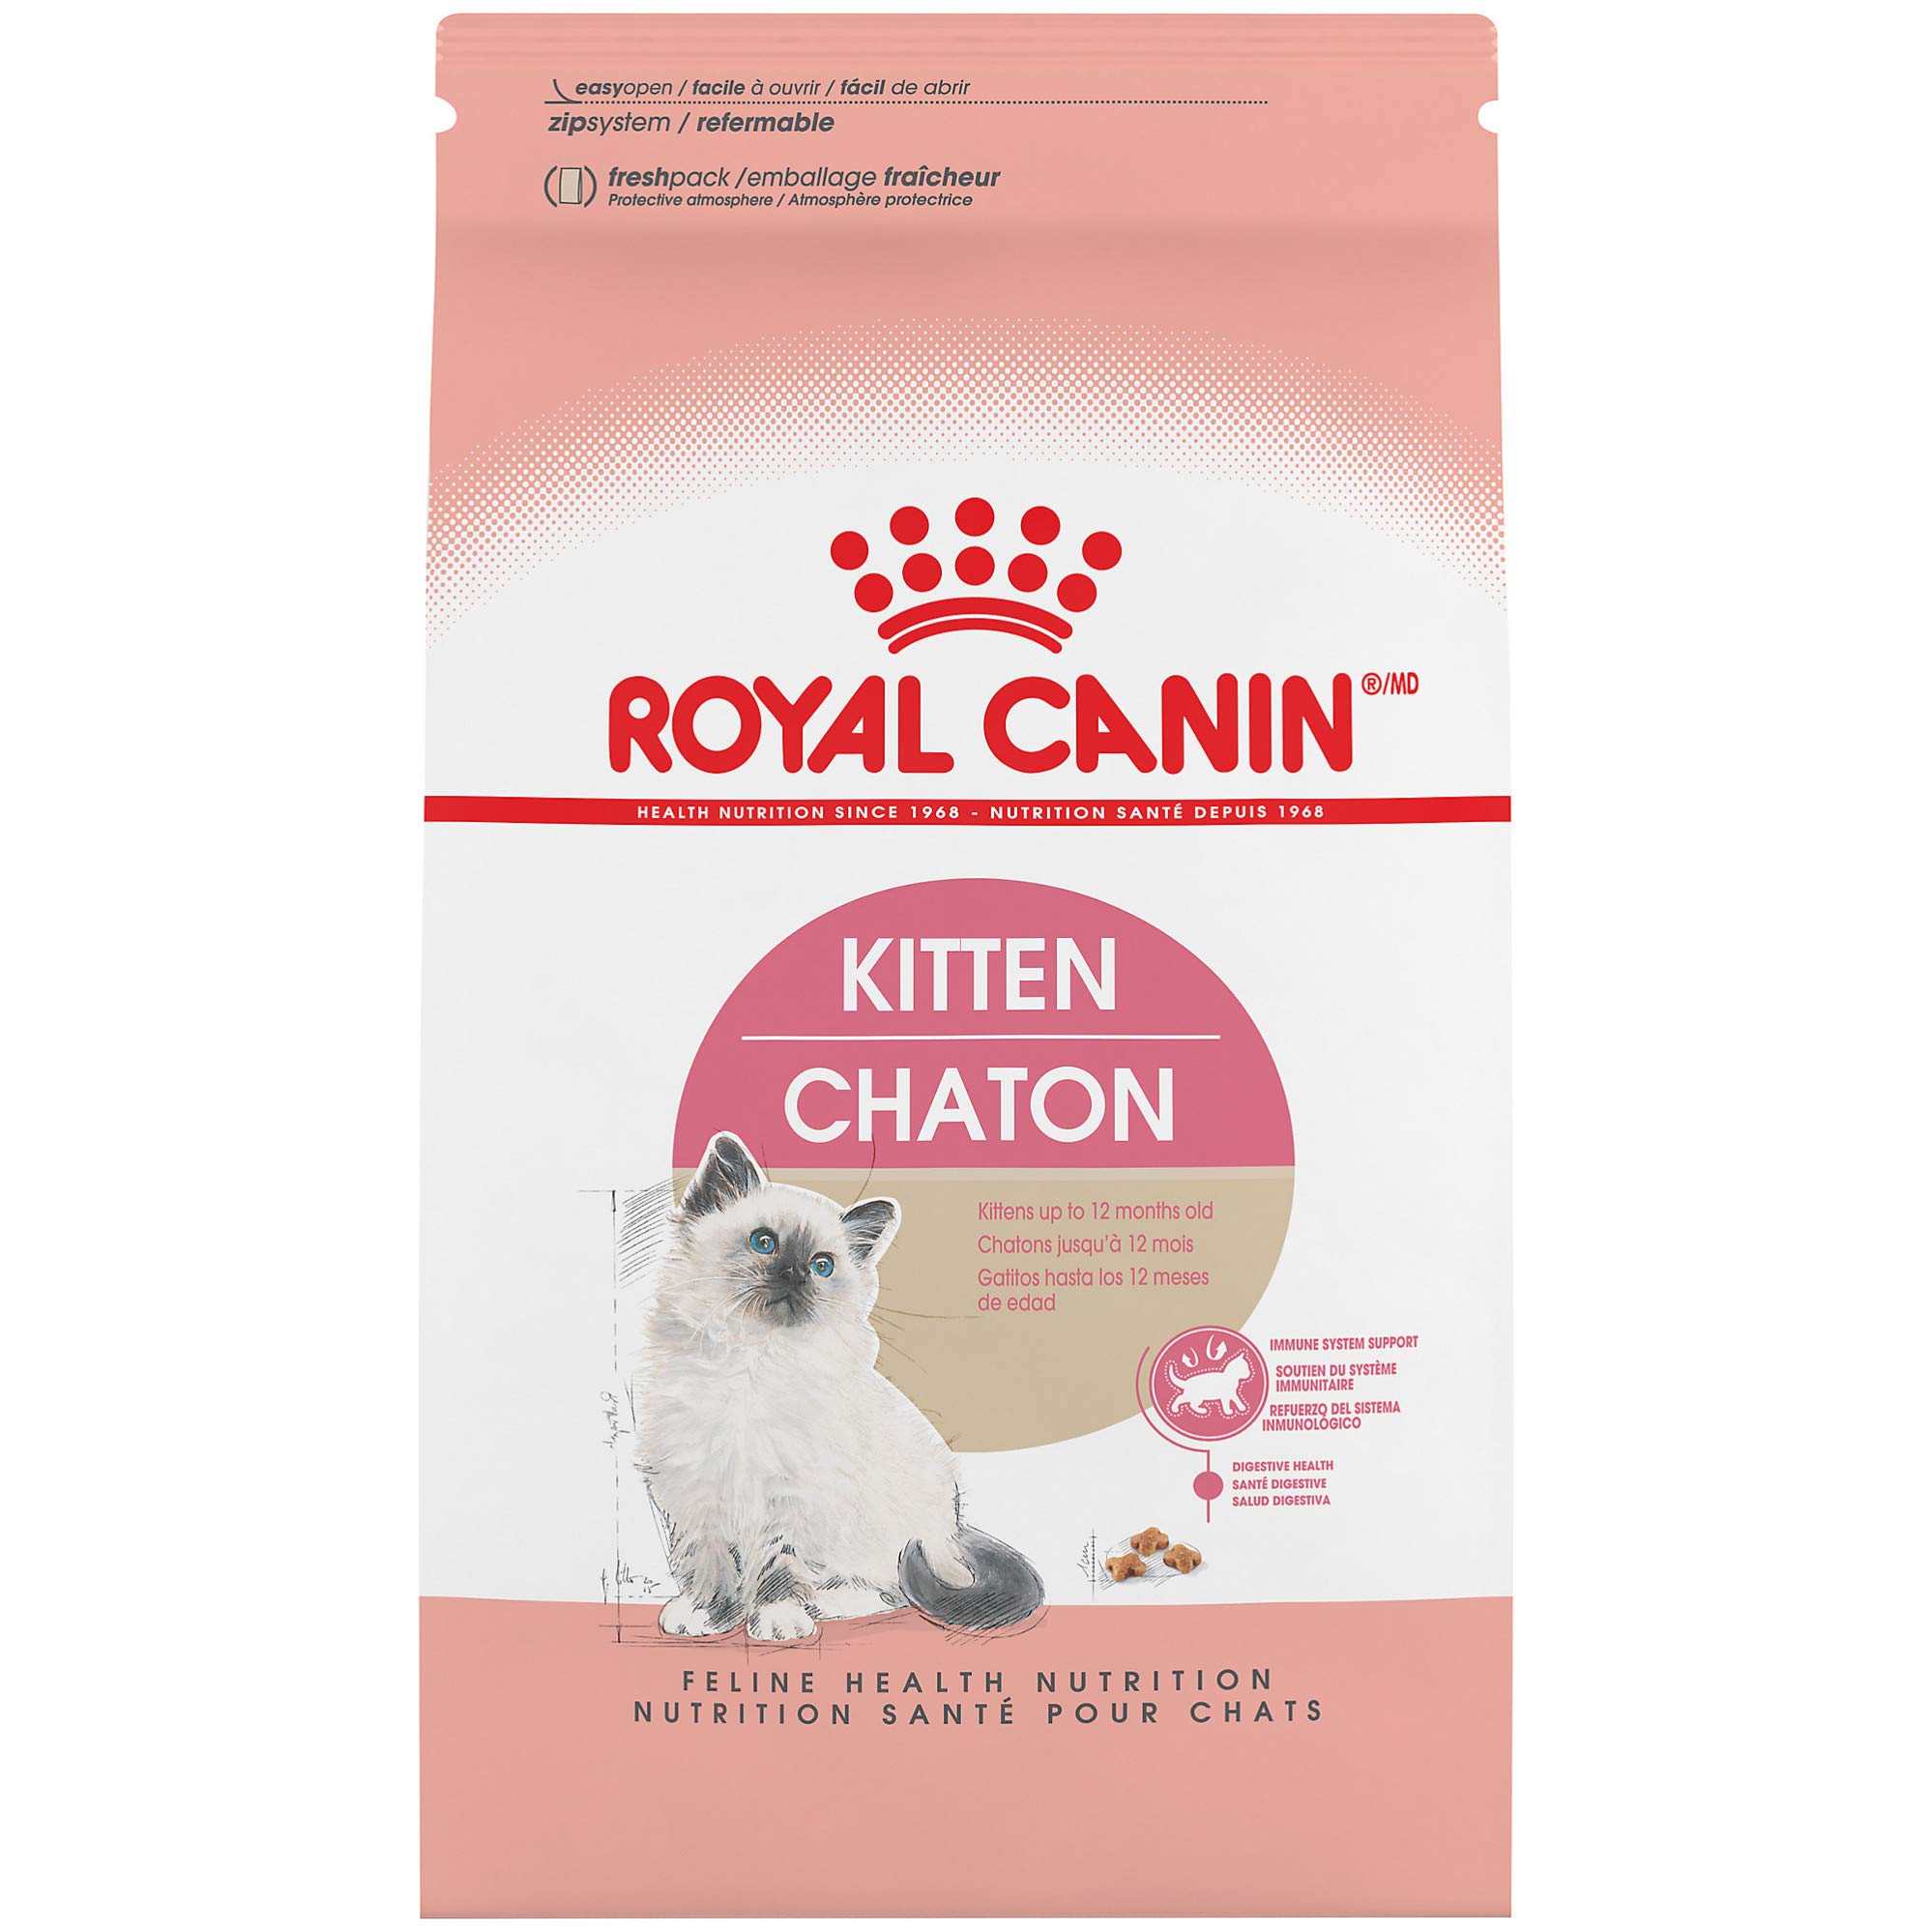 Royal Canin طعام القطط الجاف للقطط القطط الصحية والتغذي...